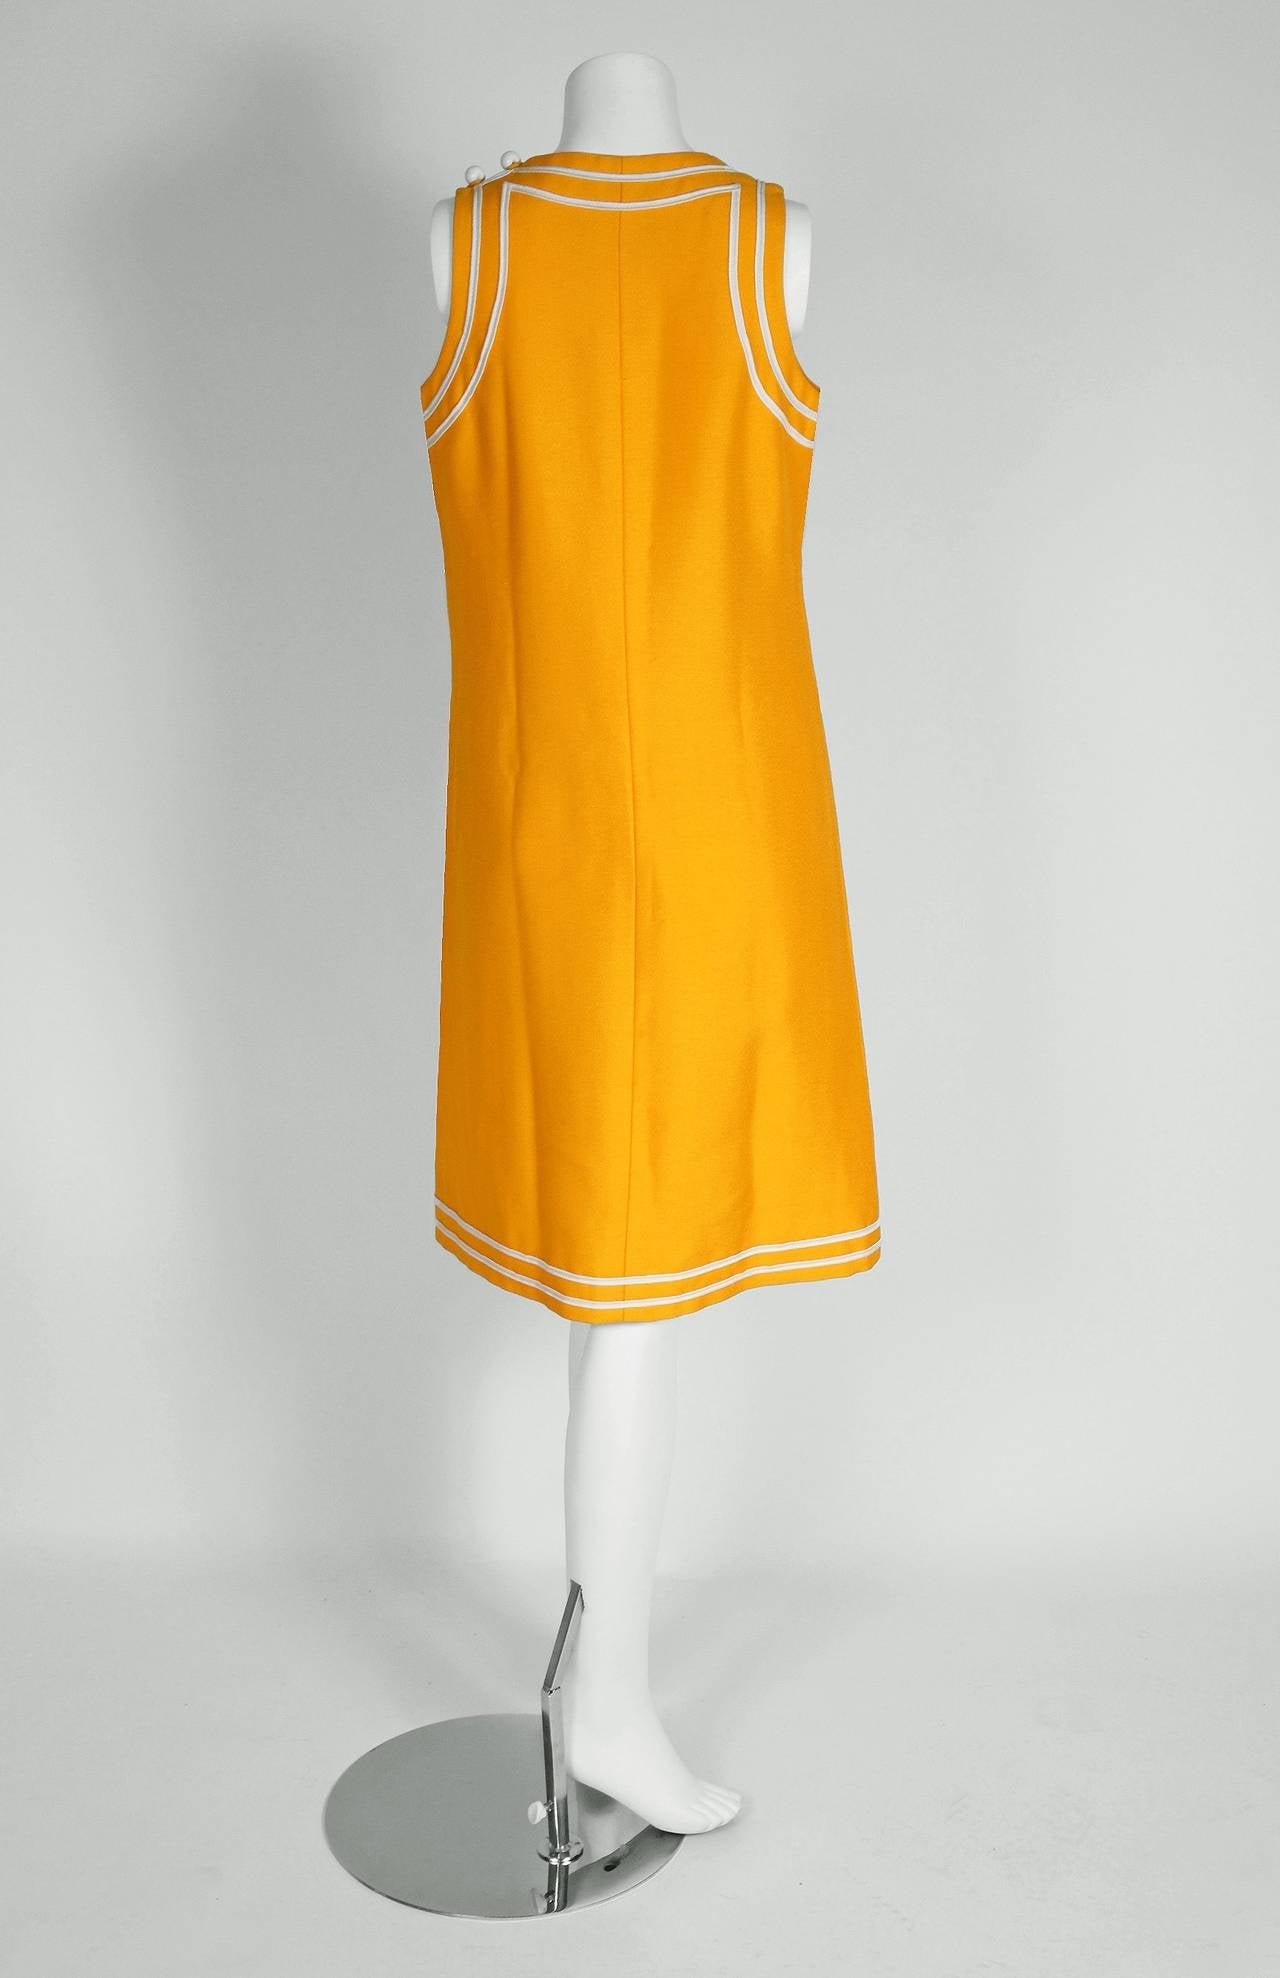 1969 Pierre Cardin Documented Yellow Linen Space-Age Stripe Mod Dress & Shorts 2